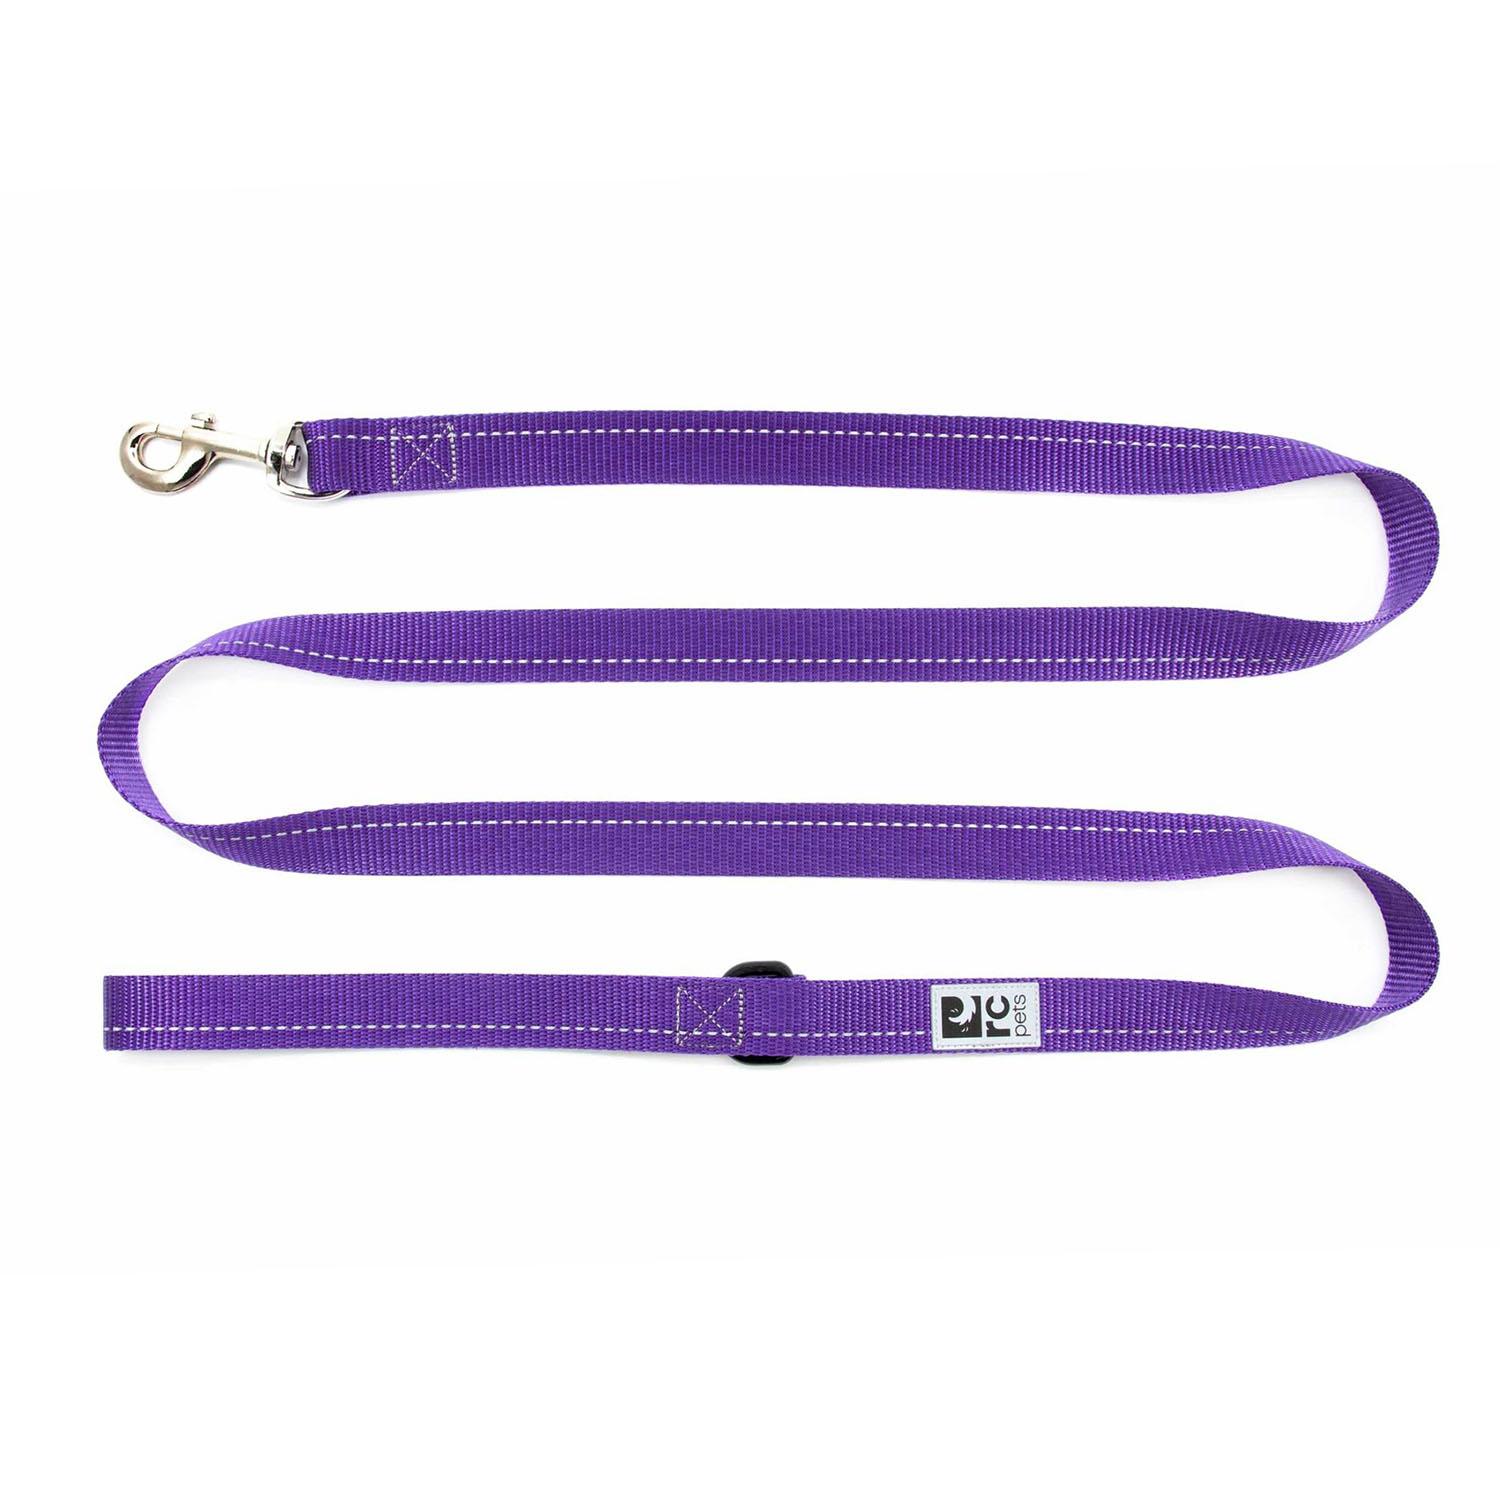 Primary Dog Leash - Purple